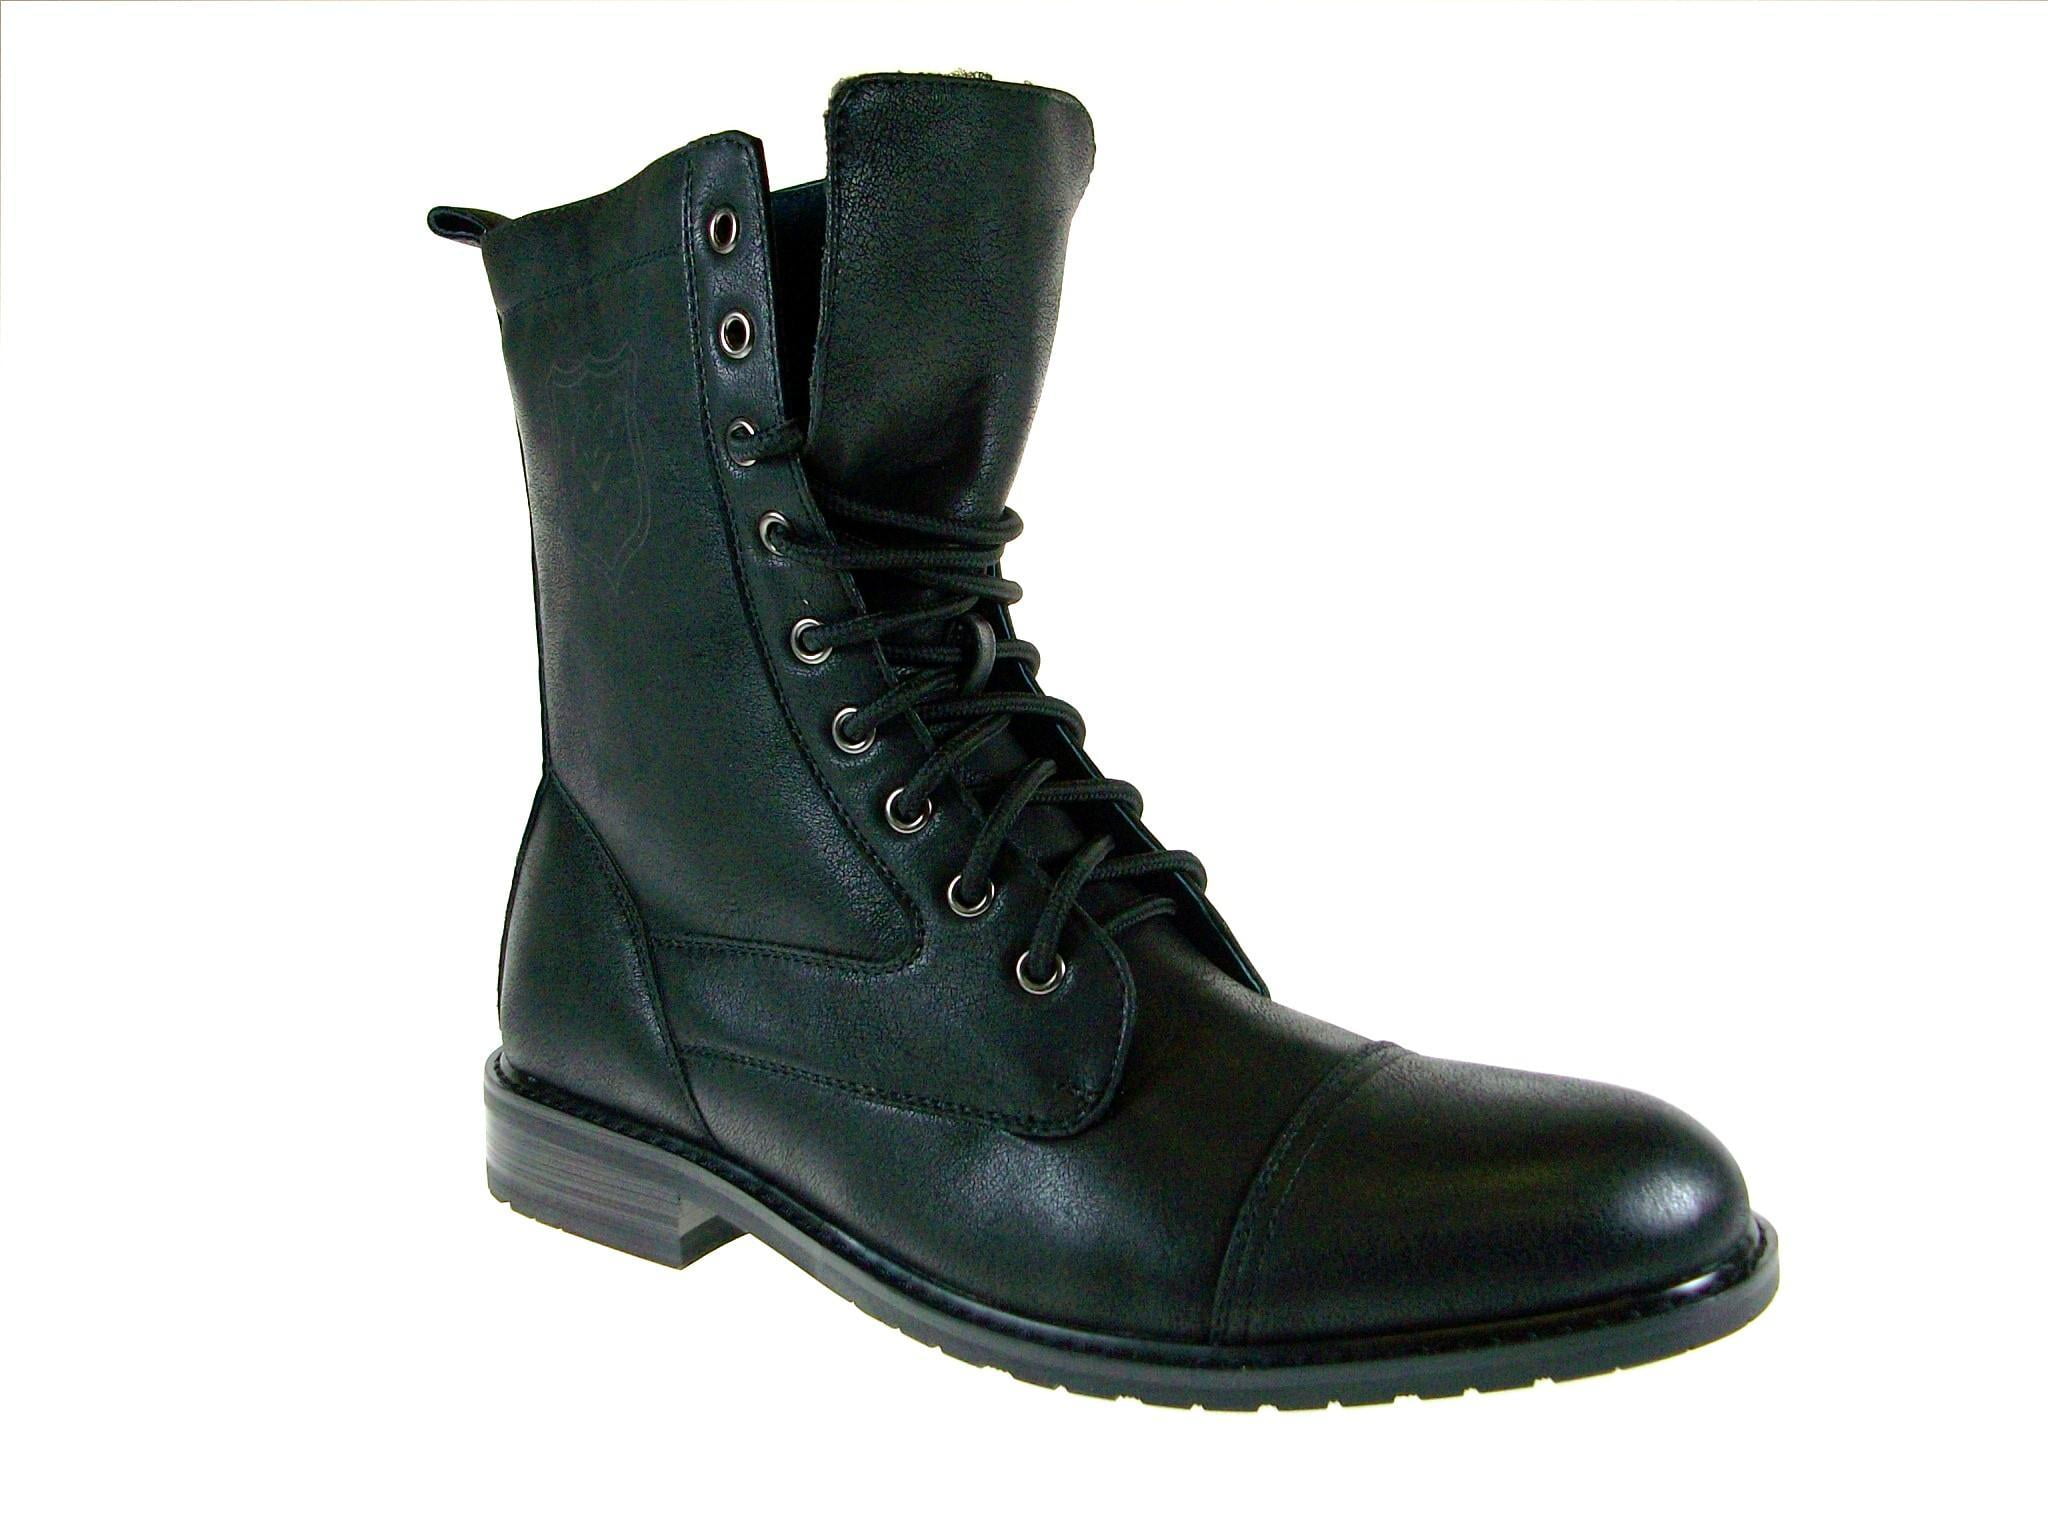 Polar Fox Men's Black Lace Up Military Combat Work Desert Ankle Boot Shoe M-516 